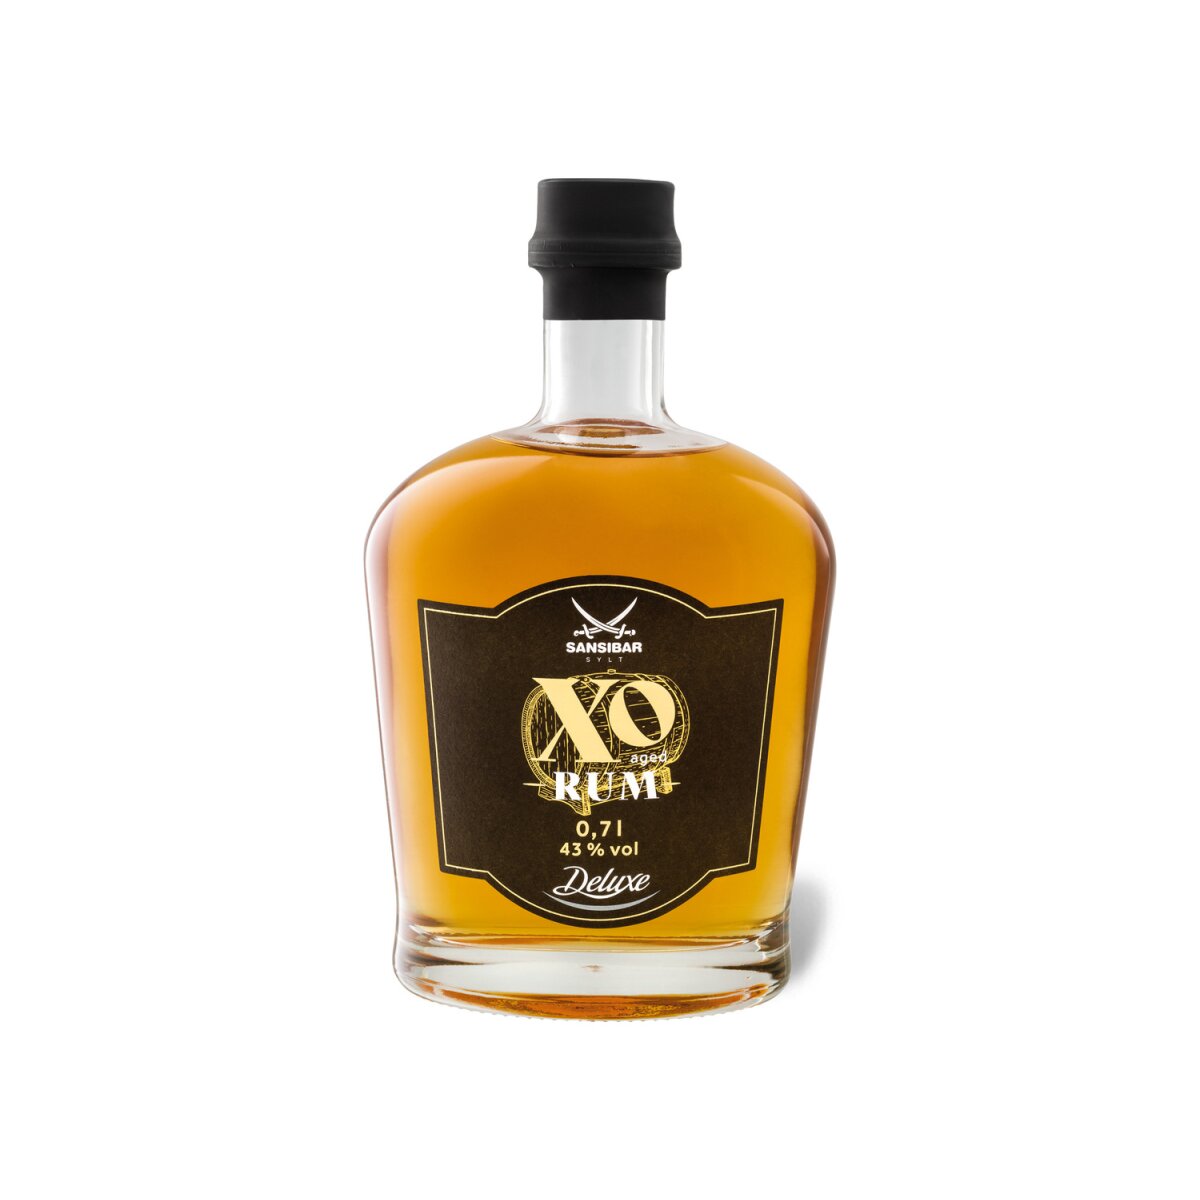 Sansibar Deluxe XO Aged Rum 43% Vol, 16,99 €